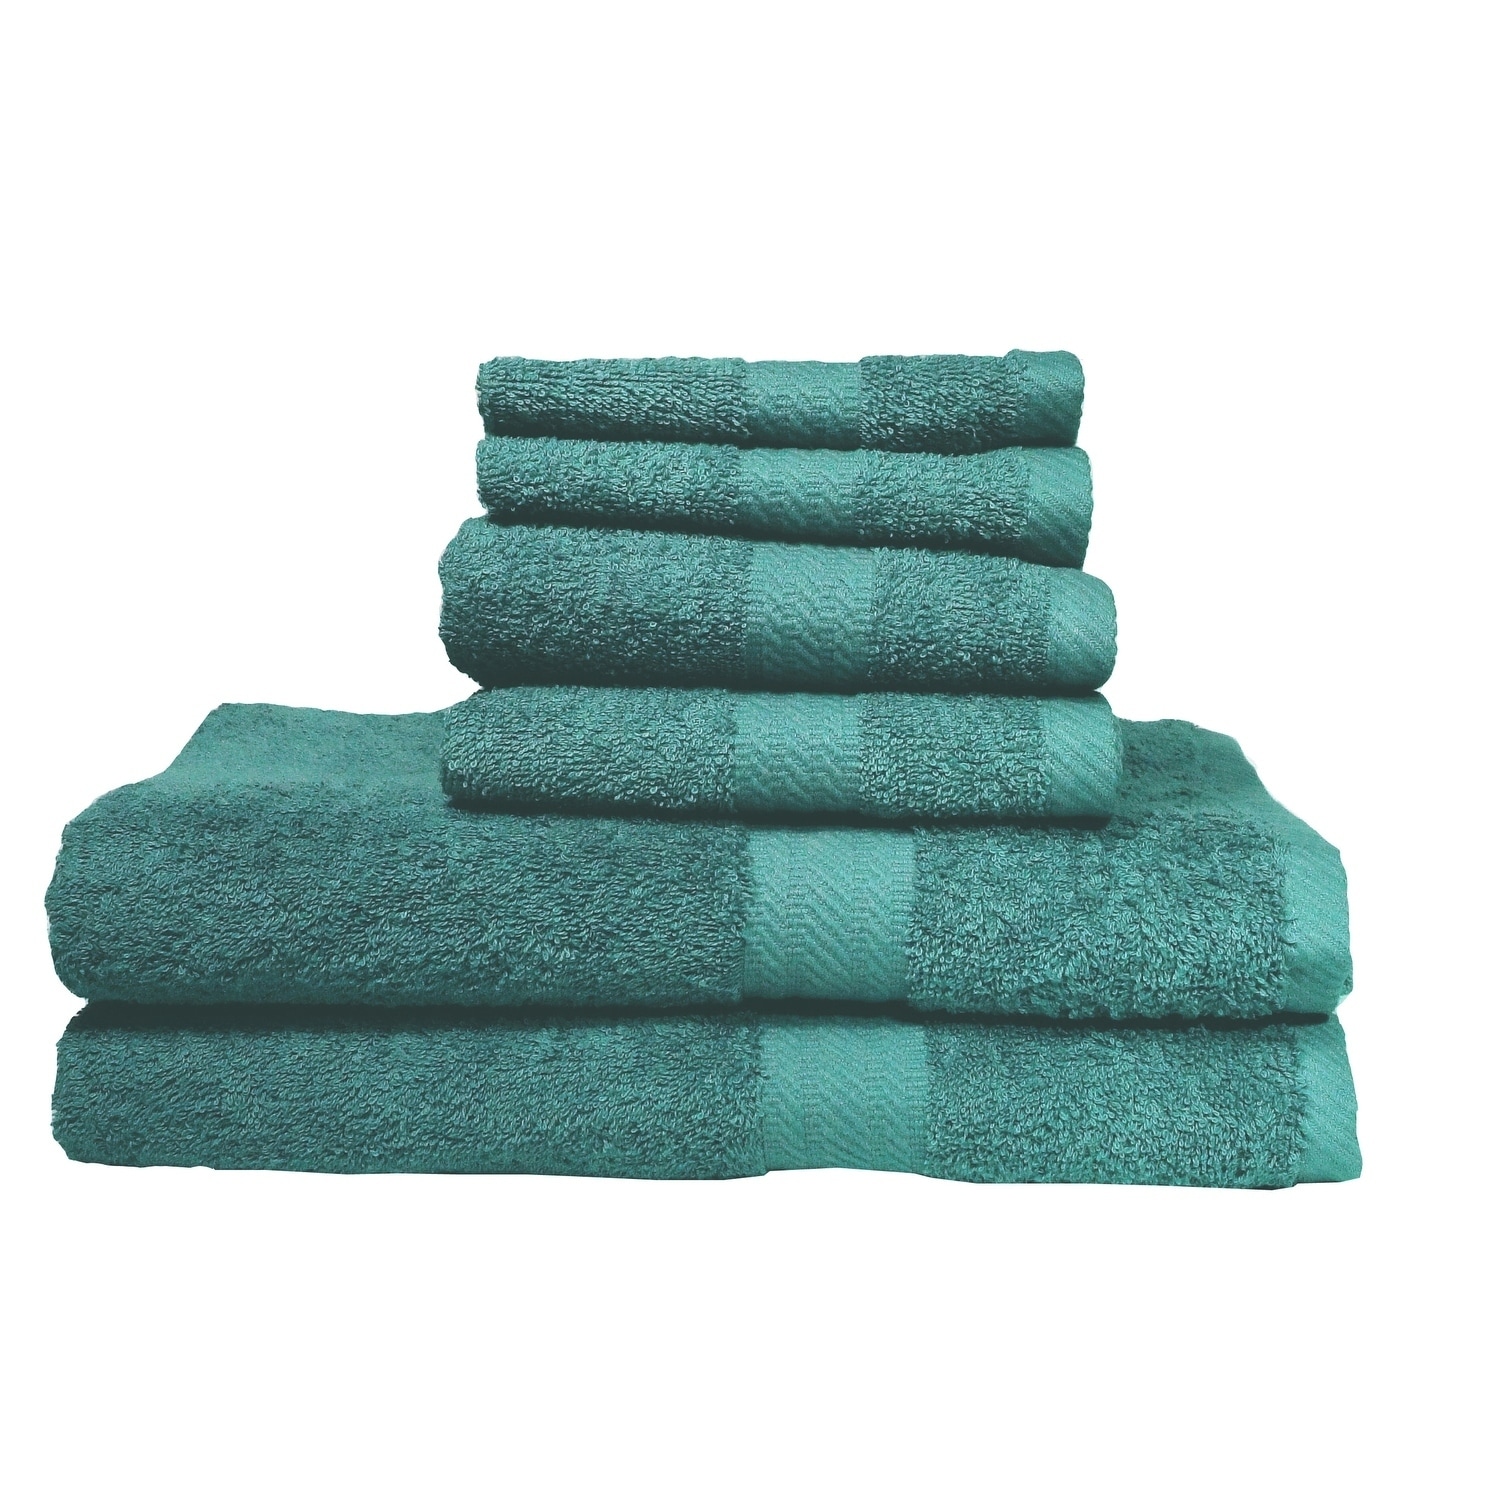 https://ak1.ostkcdn.com/images/products/8117194/Baltic-Linen-Ringspun-Cotton-6-piece-Towel-Set-0c6946f8-97ca-4157-87a6-da959671f2c2.jpg